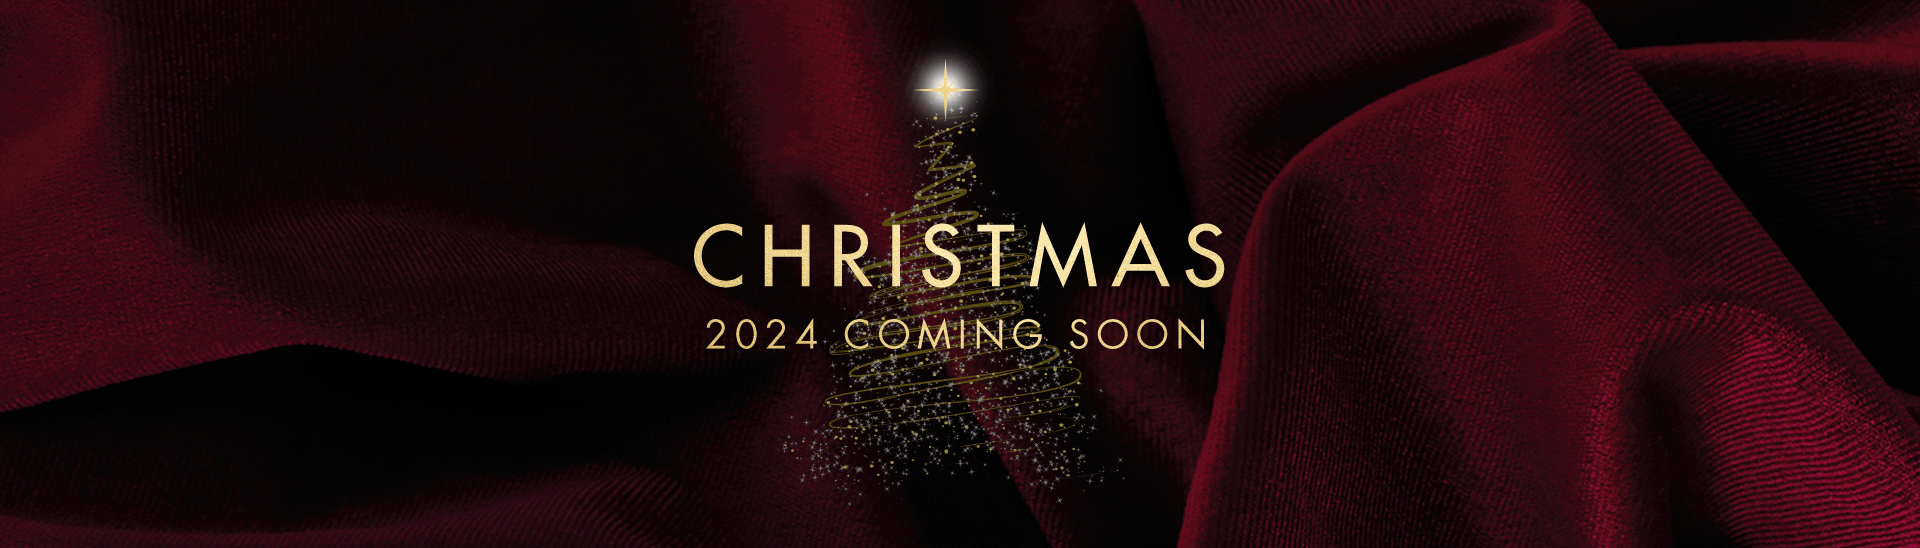 Christmas 2024 at Lytham St Annes